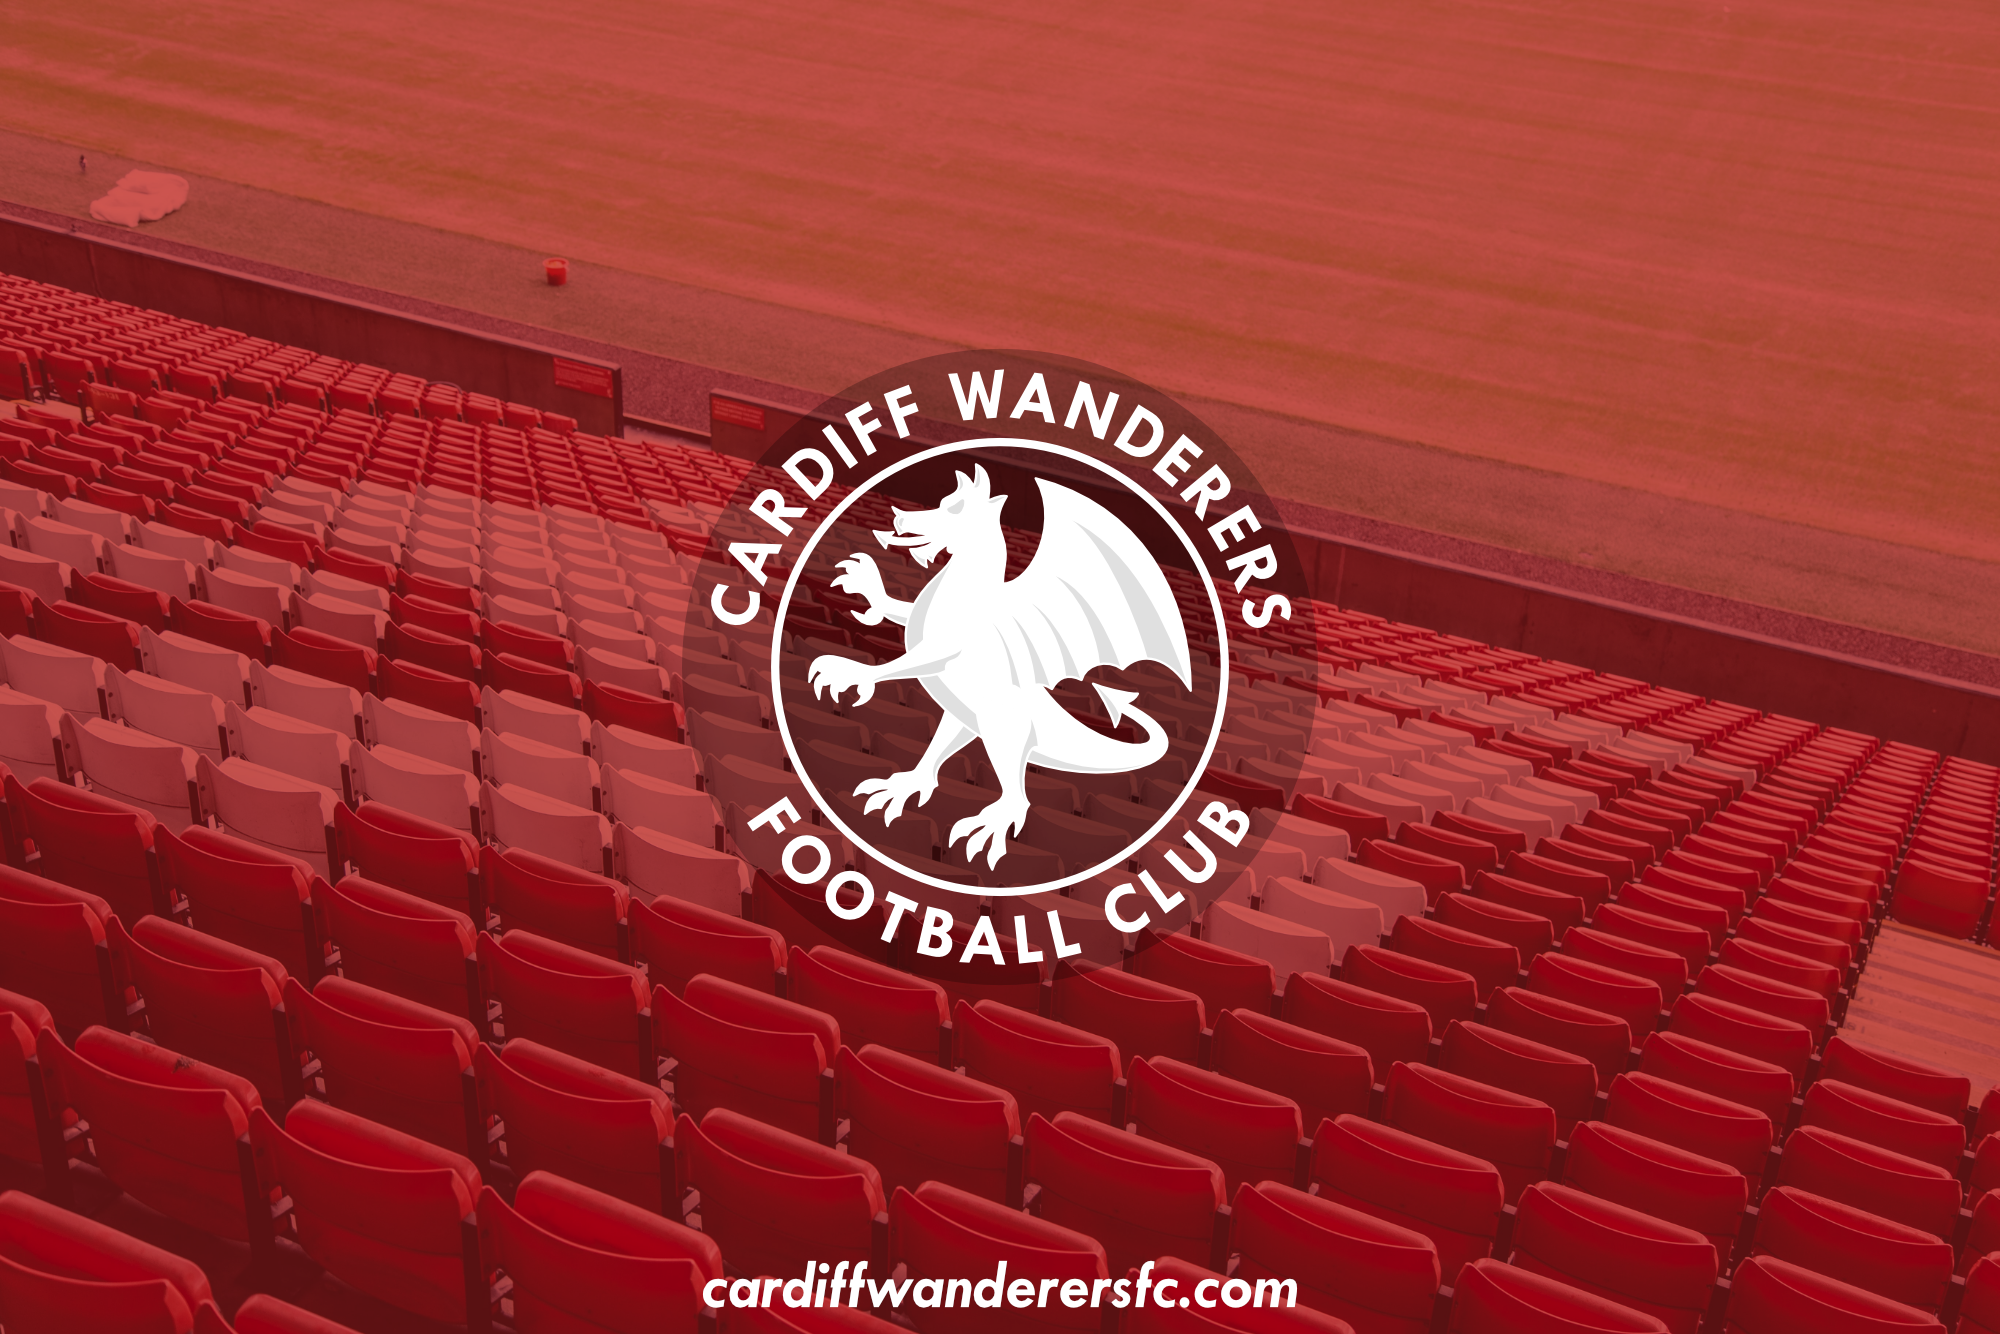 Cardiff Wanderers Football Club banner